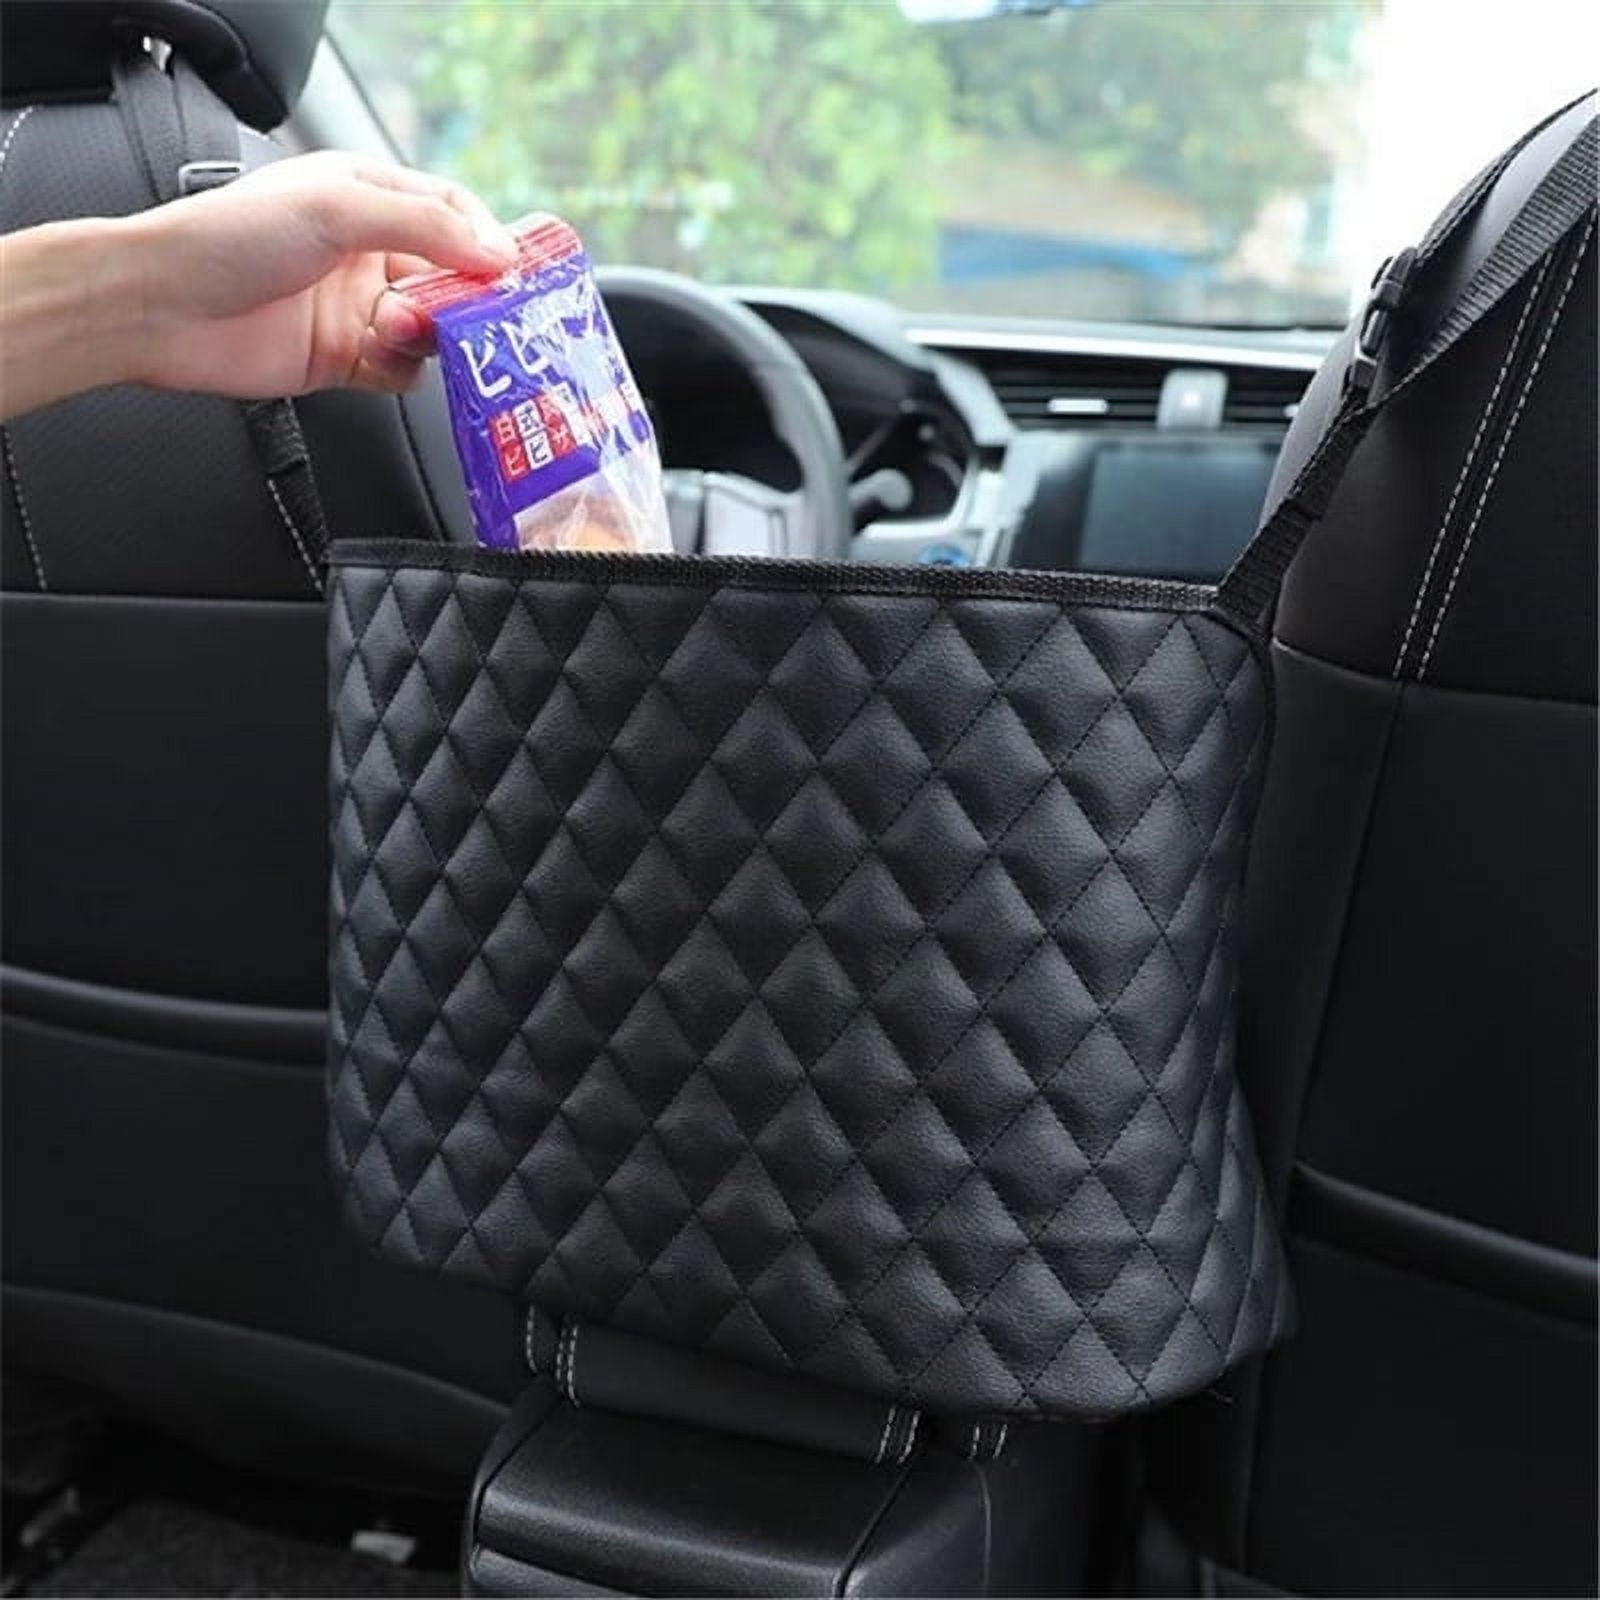 Best Car Handbag Holder Easily Installed with 0 Tools!